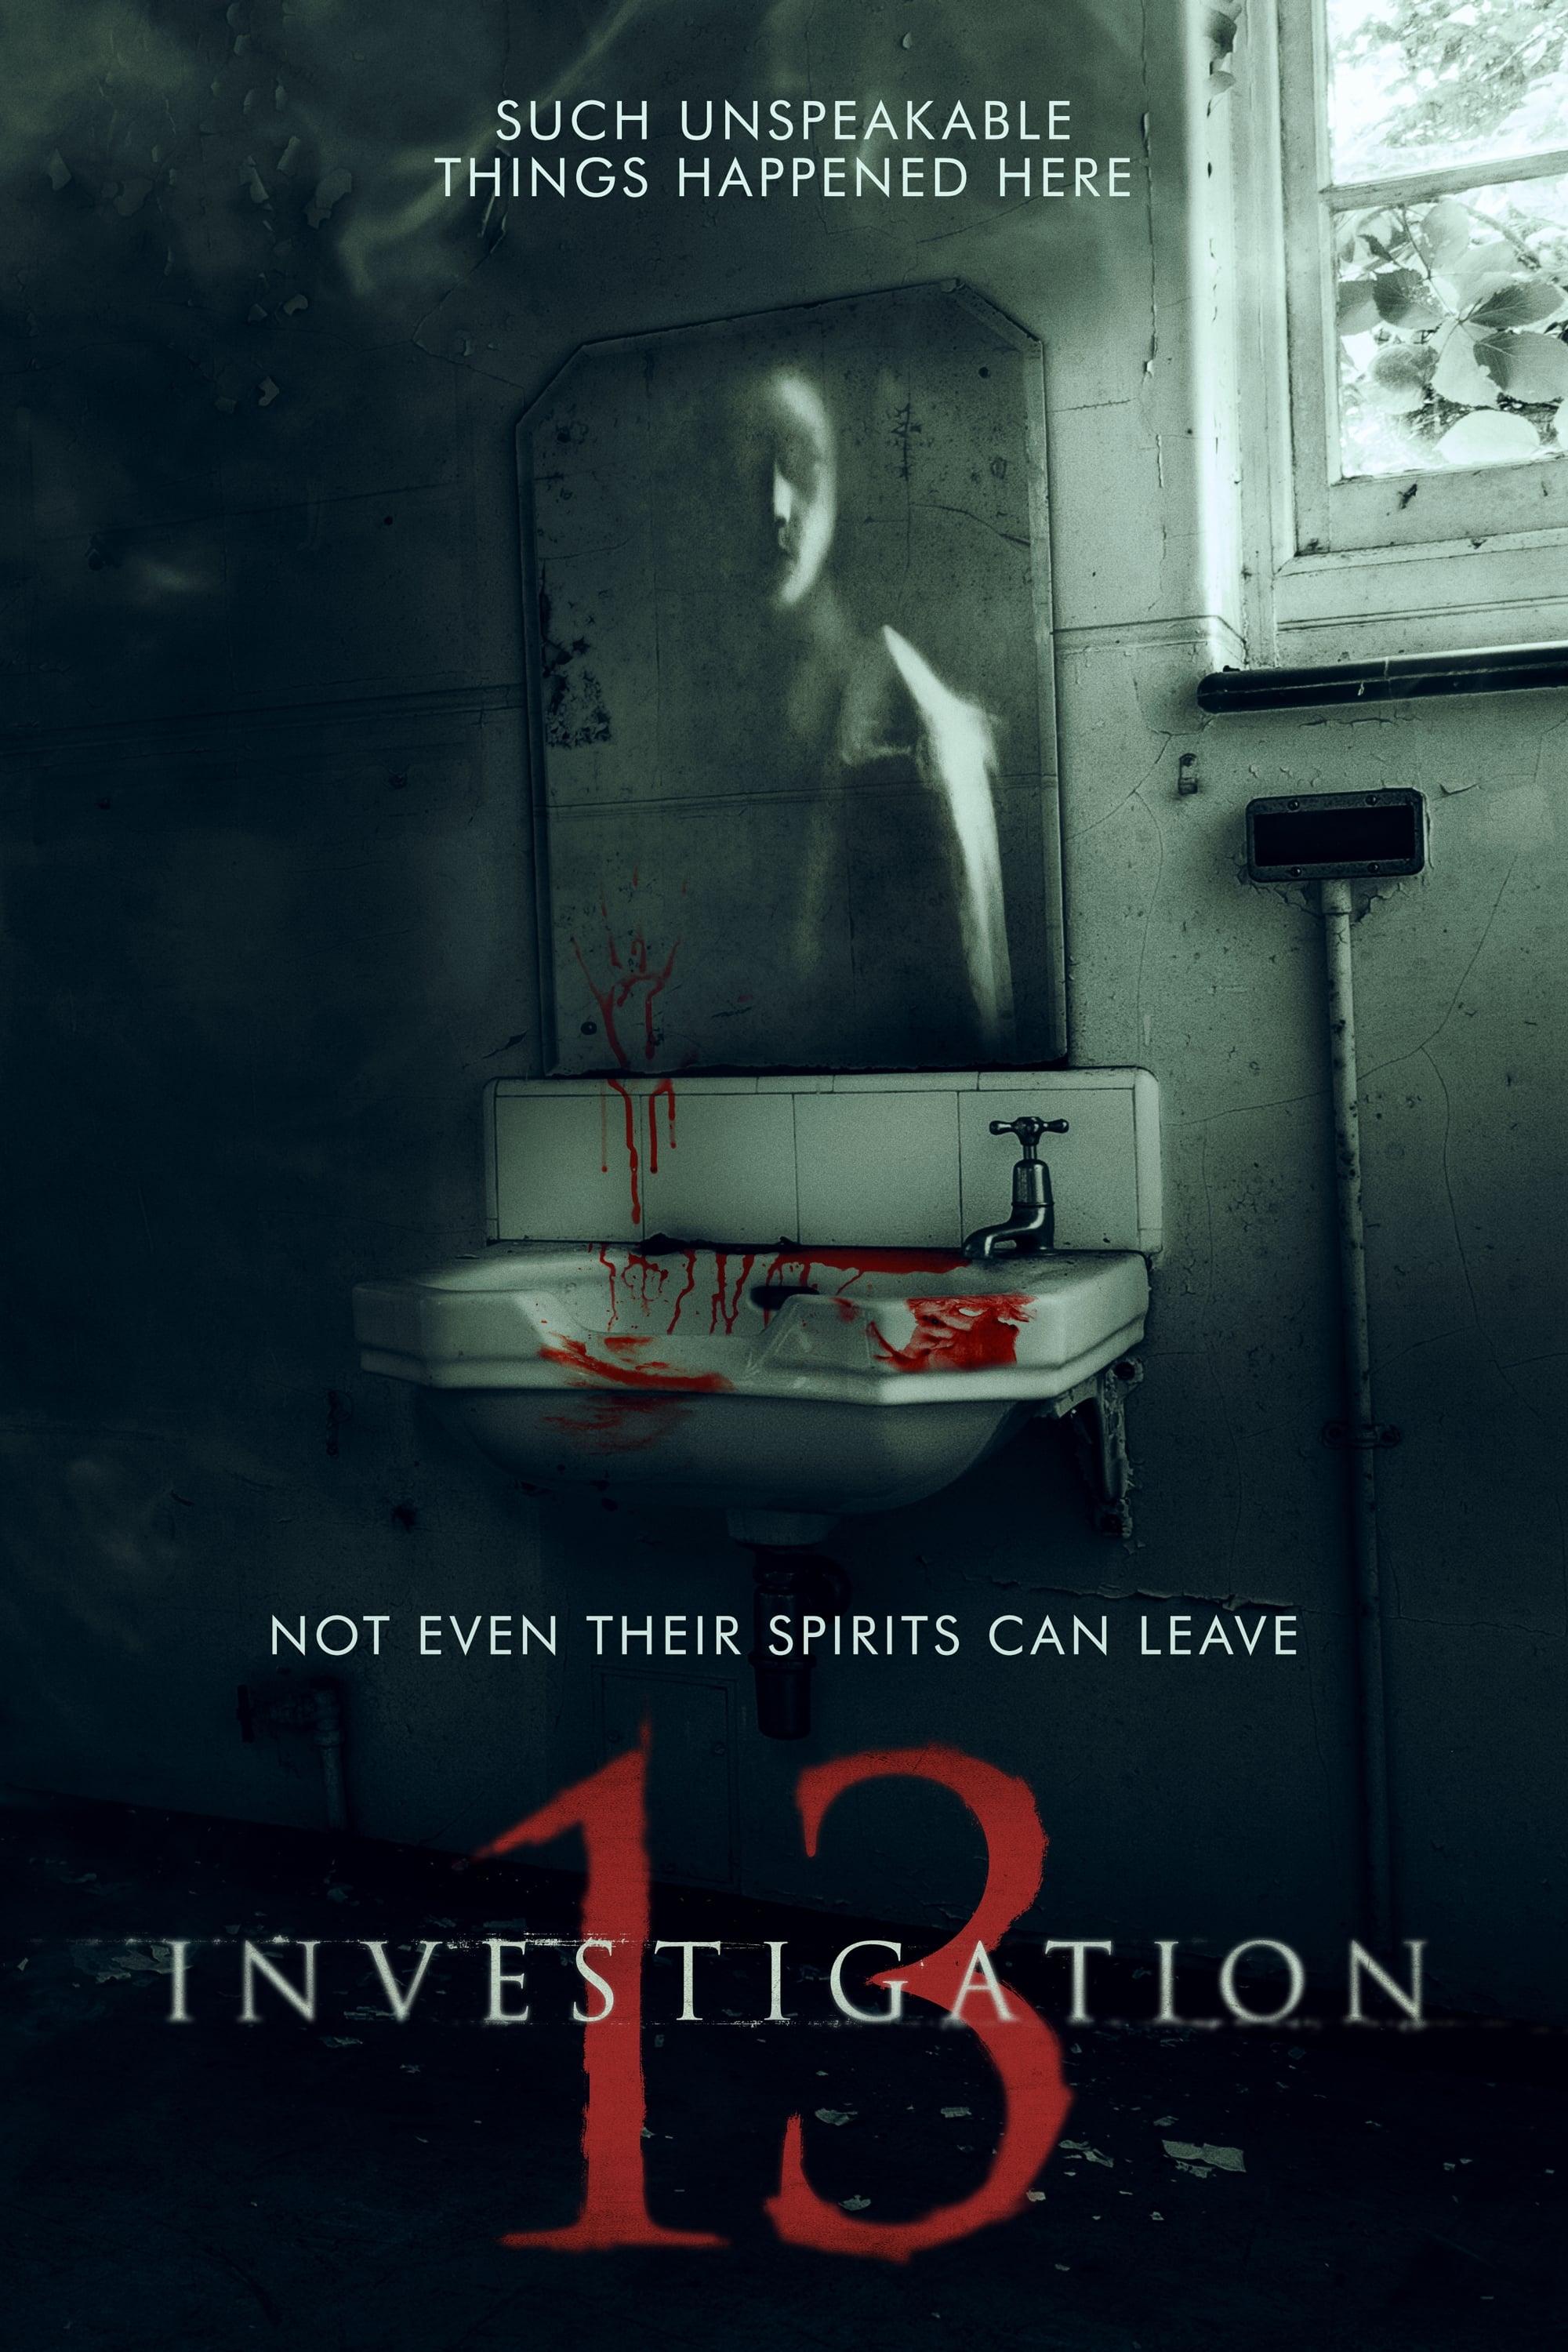 Investigation 13 poster